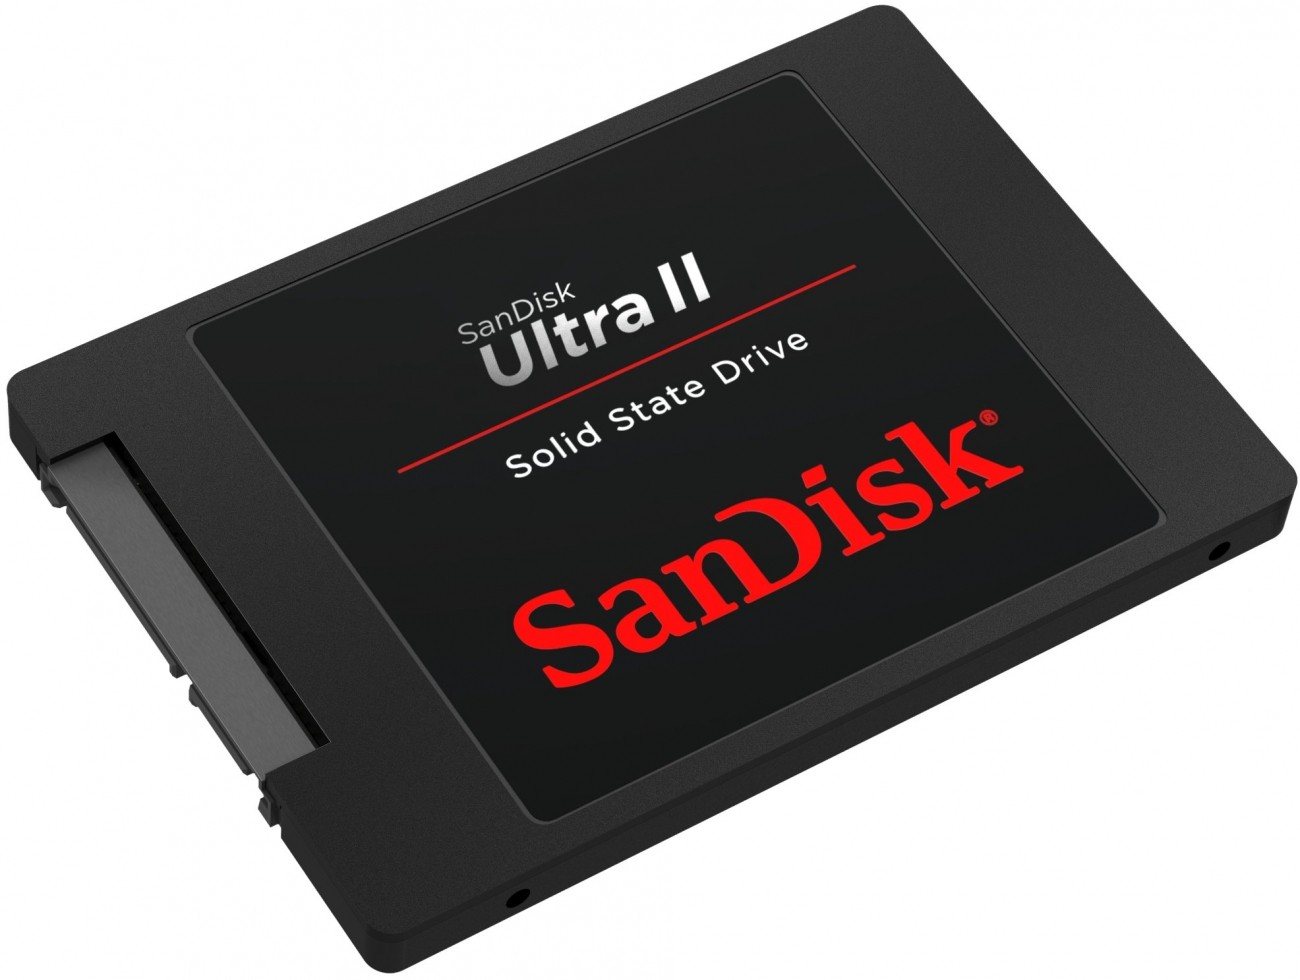 SanDisk Ultra II 240GB SSD Review - SanDisk TLC NAND Flash ...